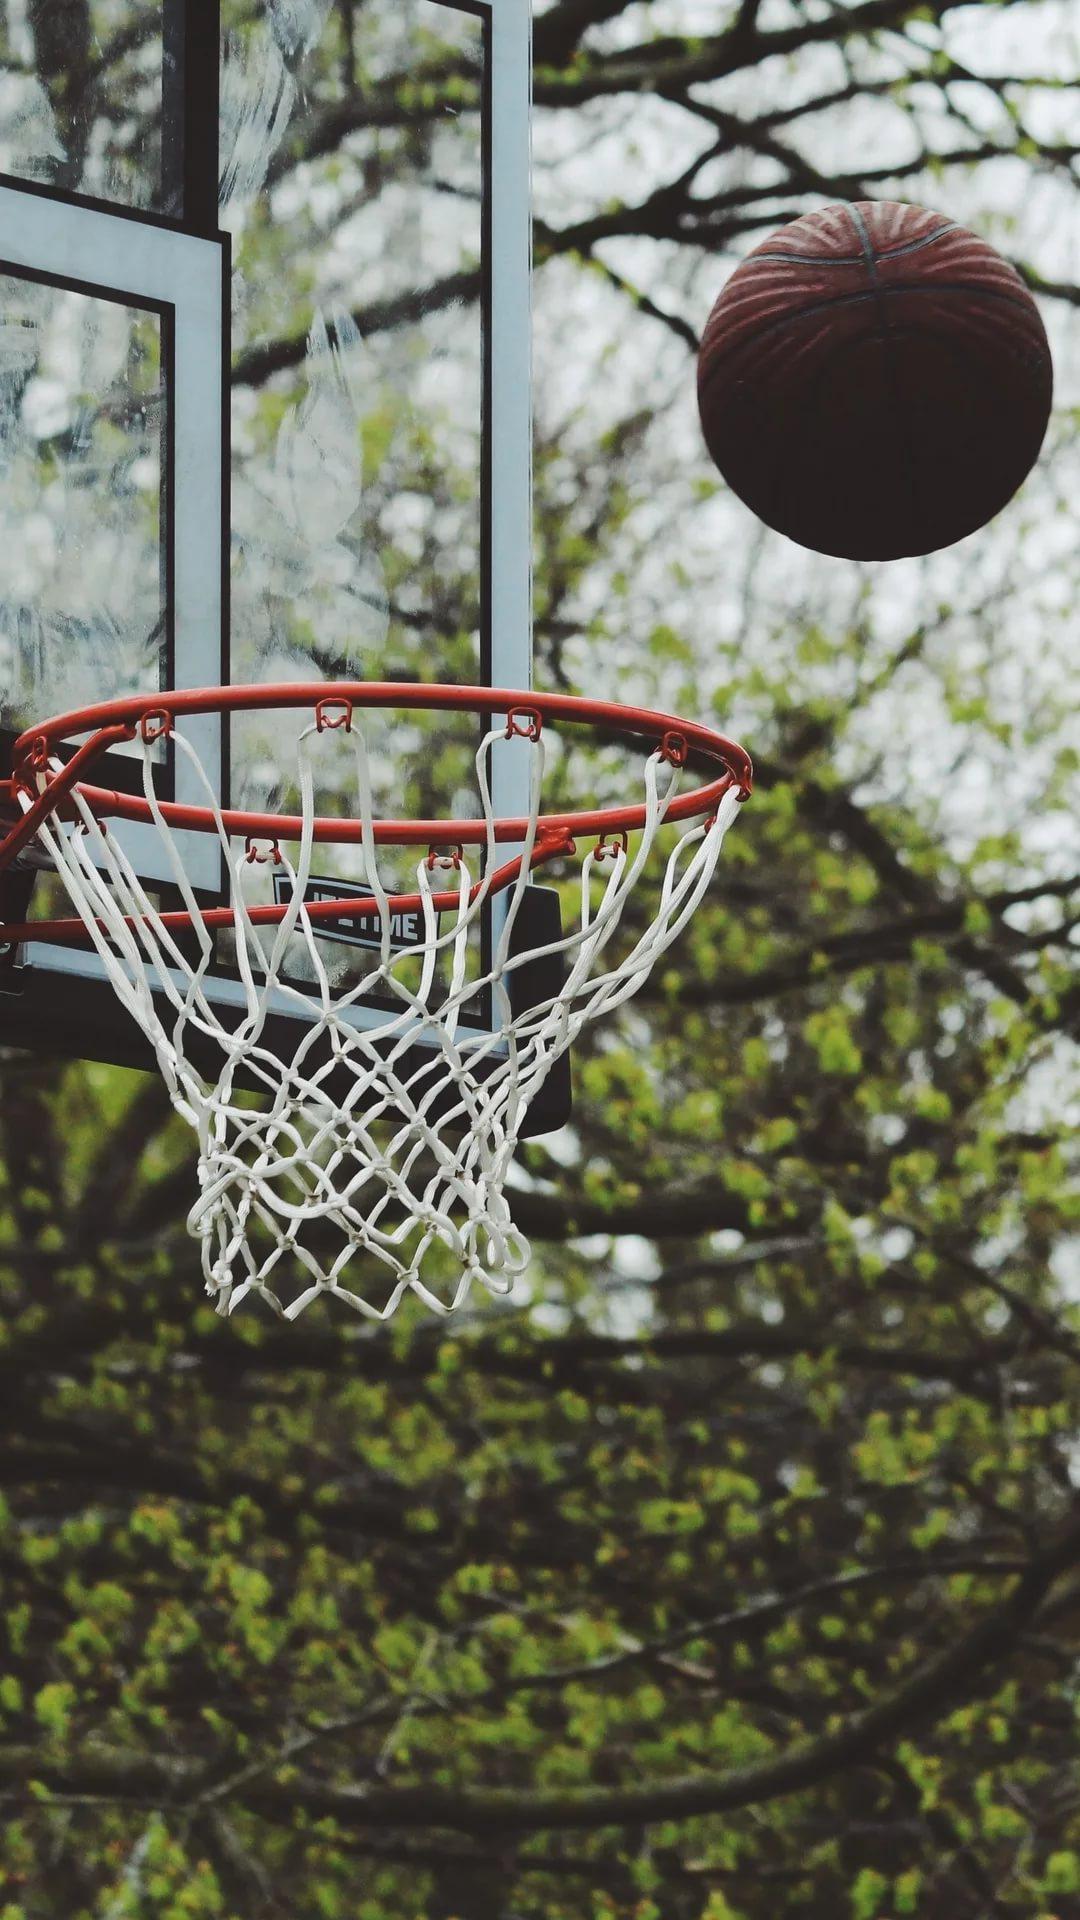 basketball hoop iphone wallpaper